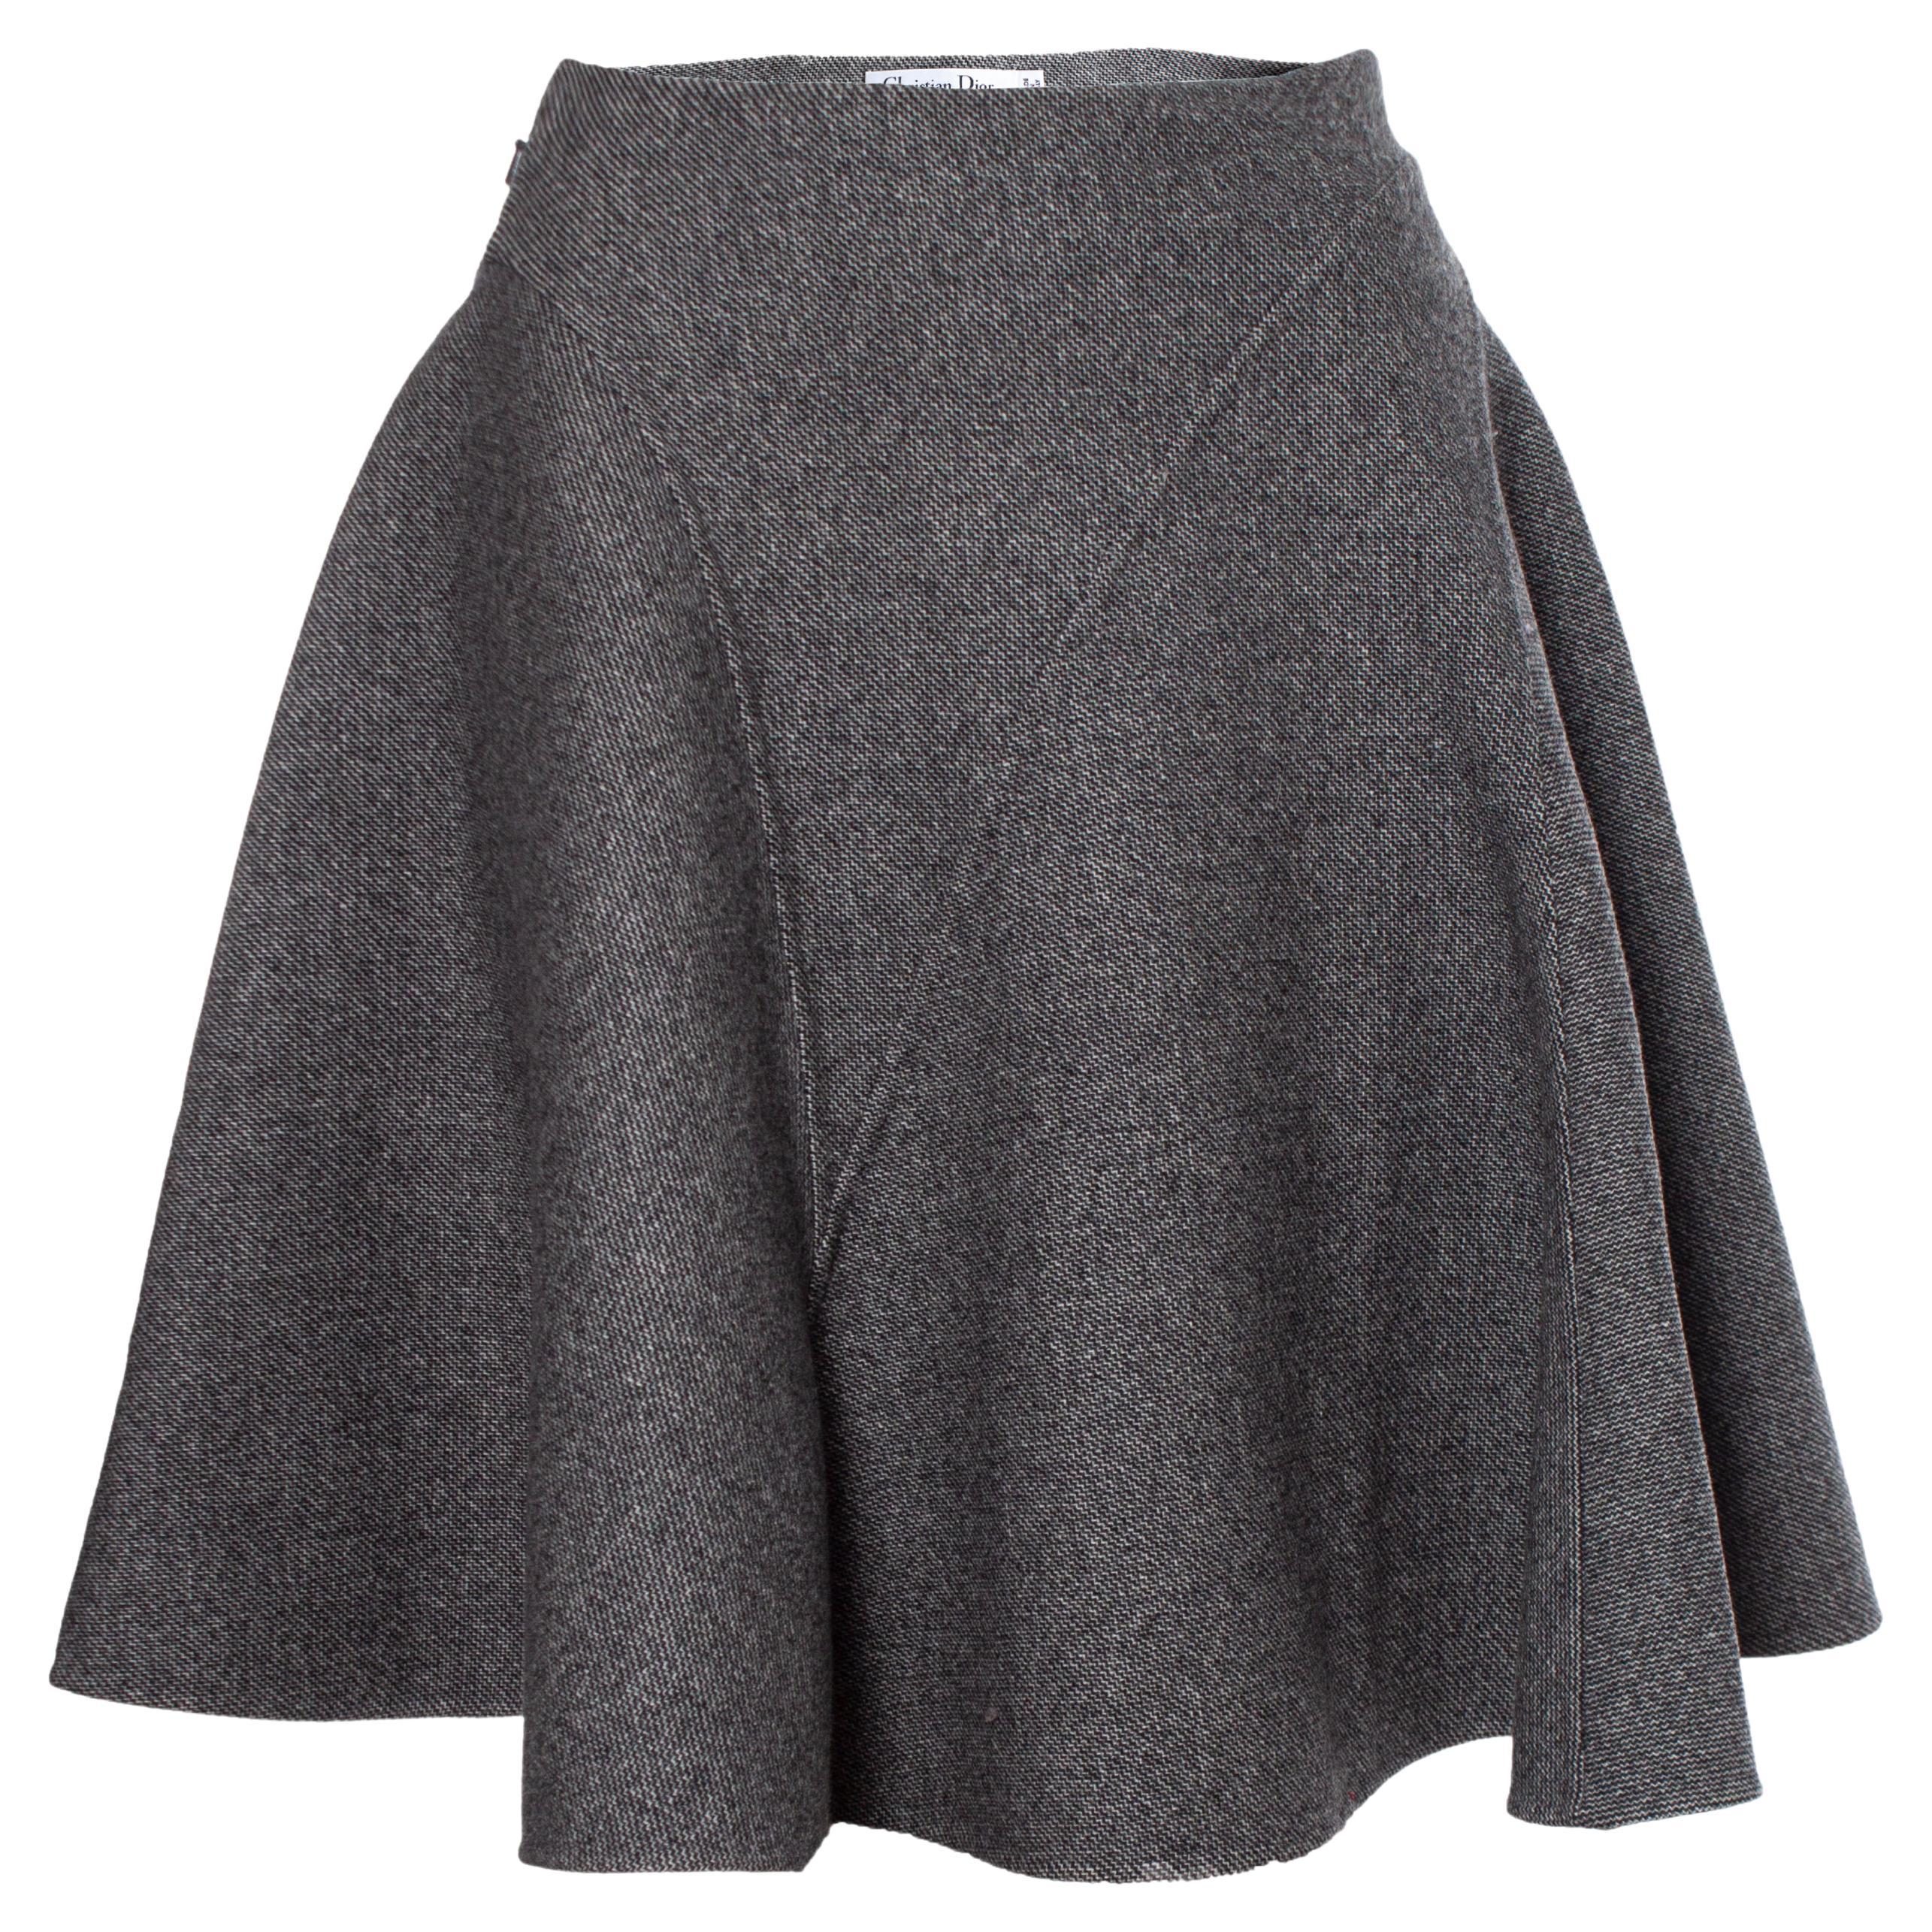 Christian Dior, Grey wool A line skirt